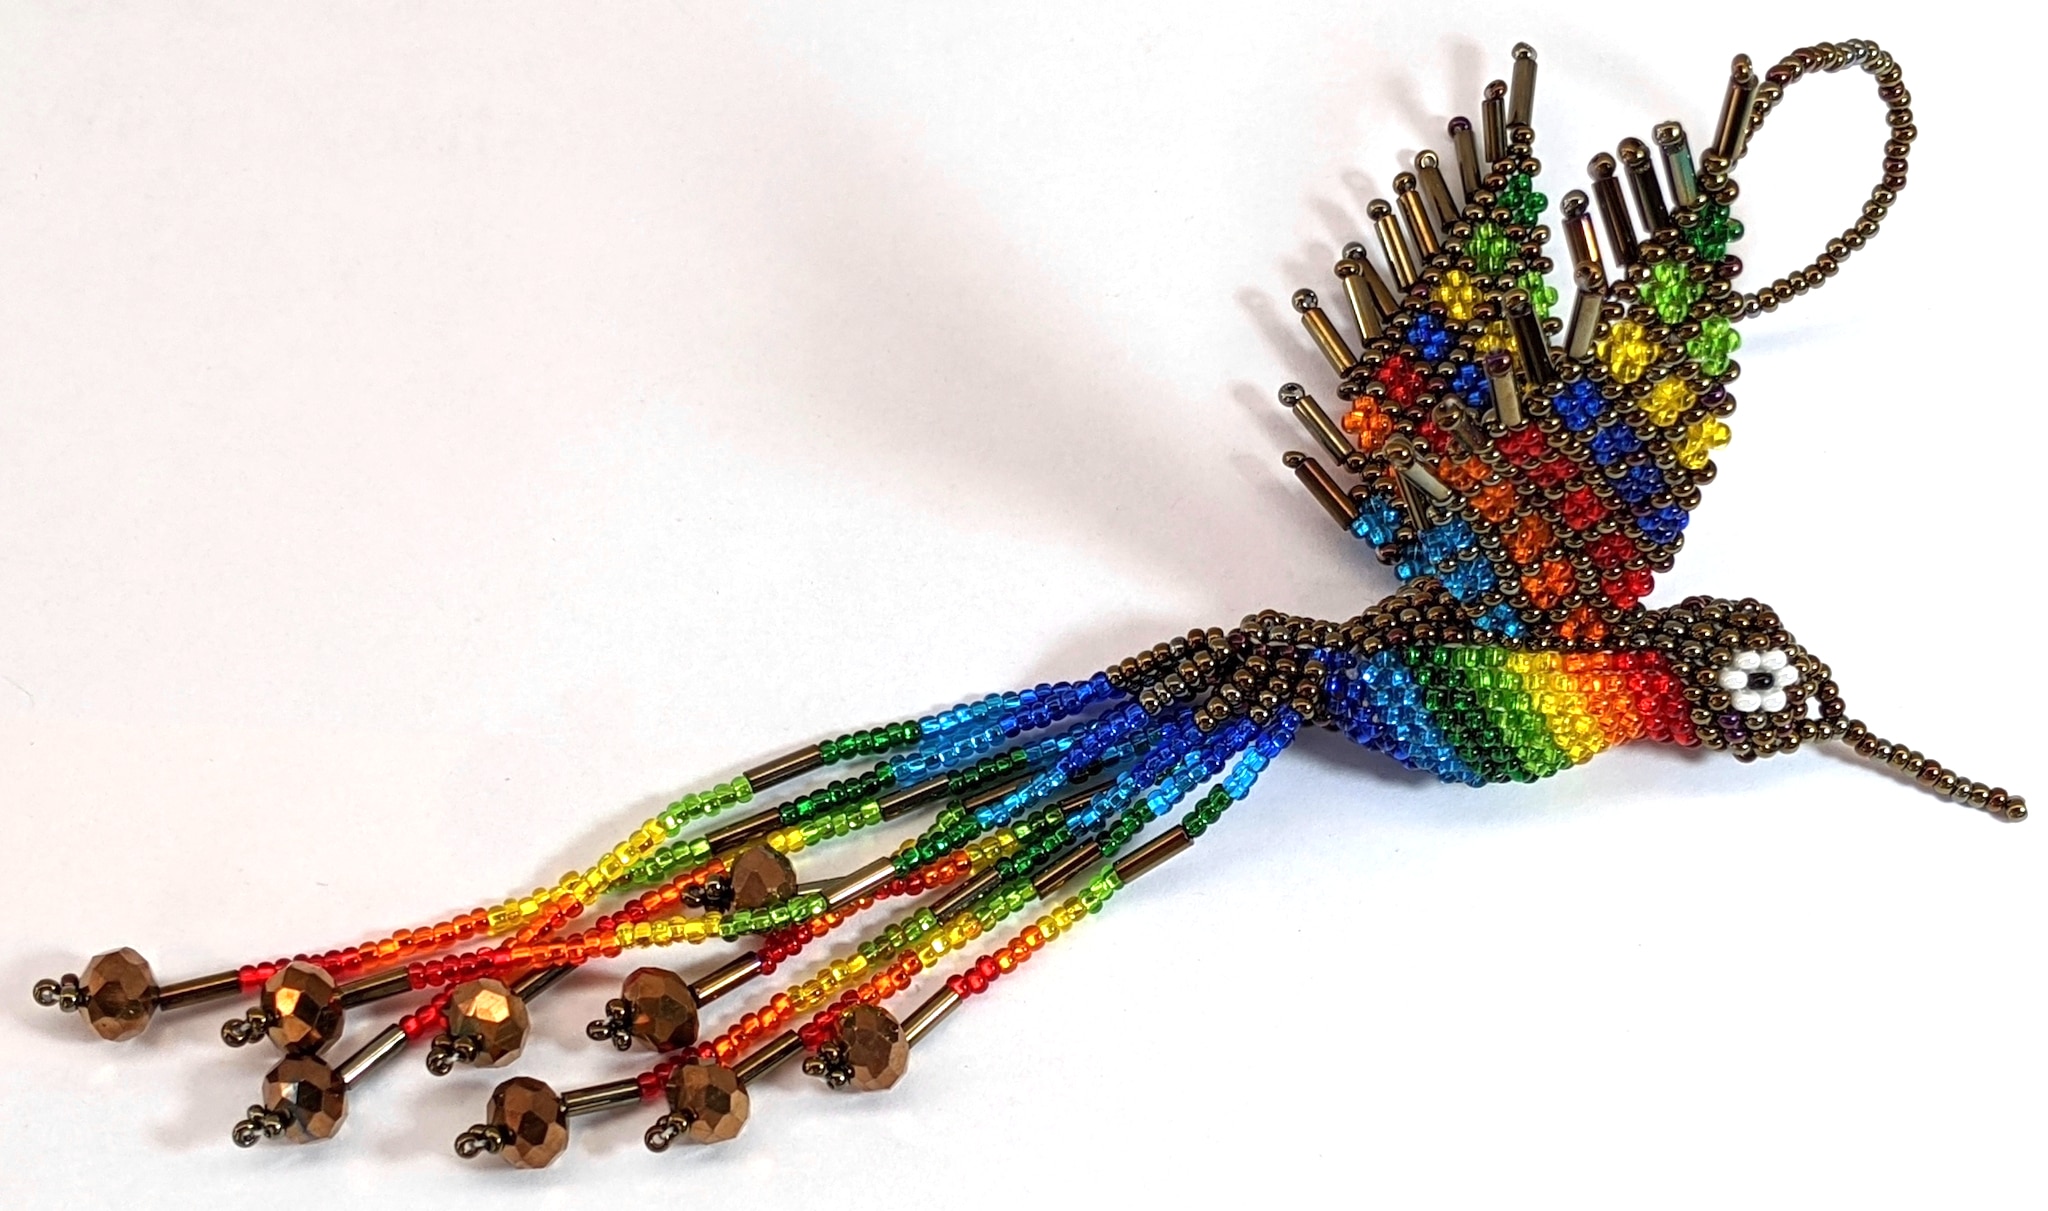 Hummingbird Beaded Ornament - Rainbow with Iridescent Brown